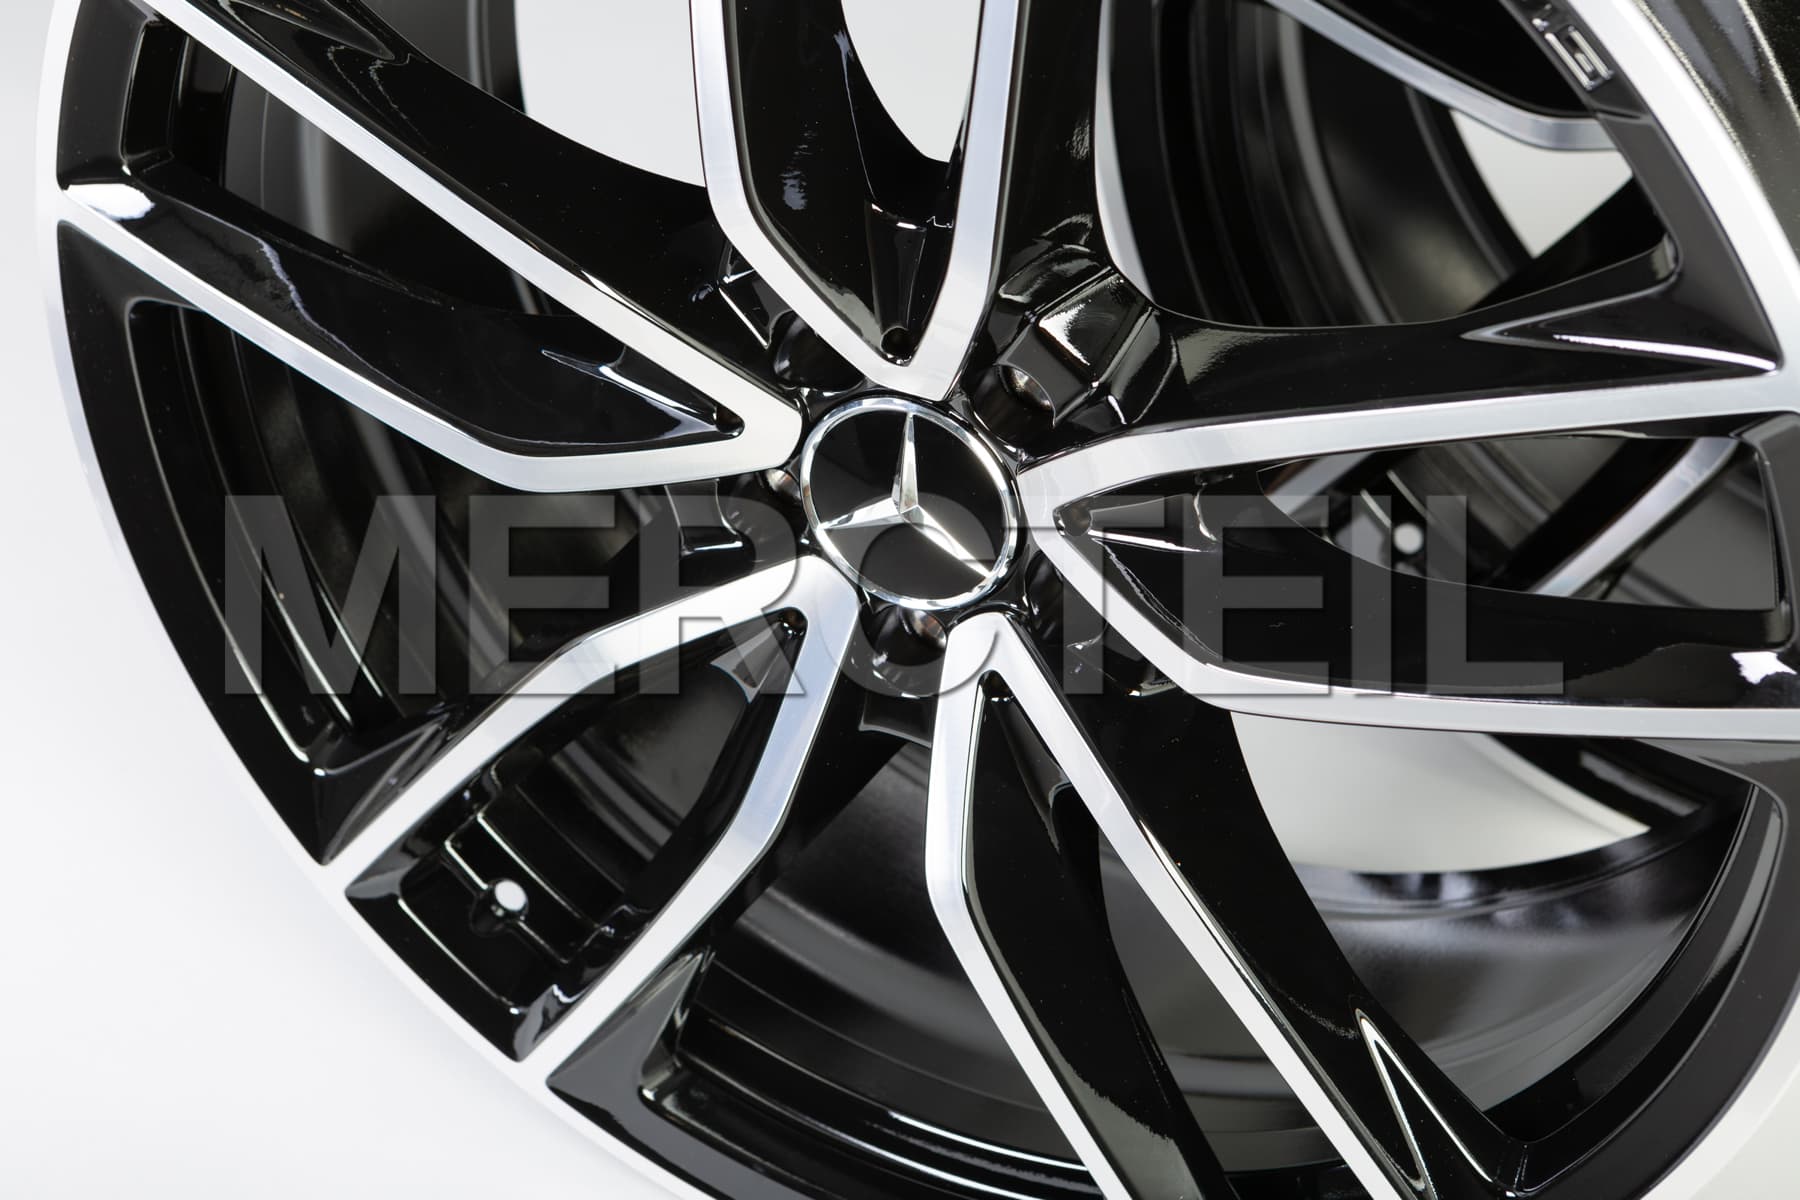 Mercedes C Class AMG Wheels Black 19 Inch Genuine Mercedes Benz (part number: A20540149007X23)